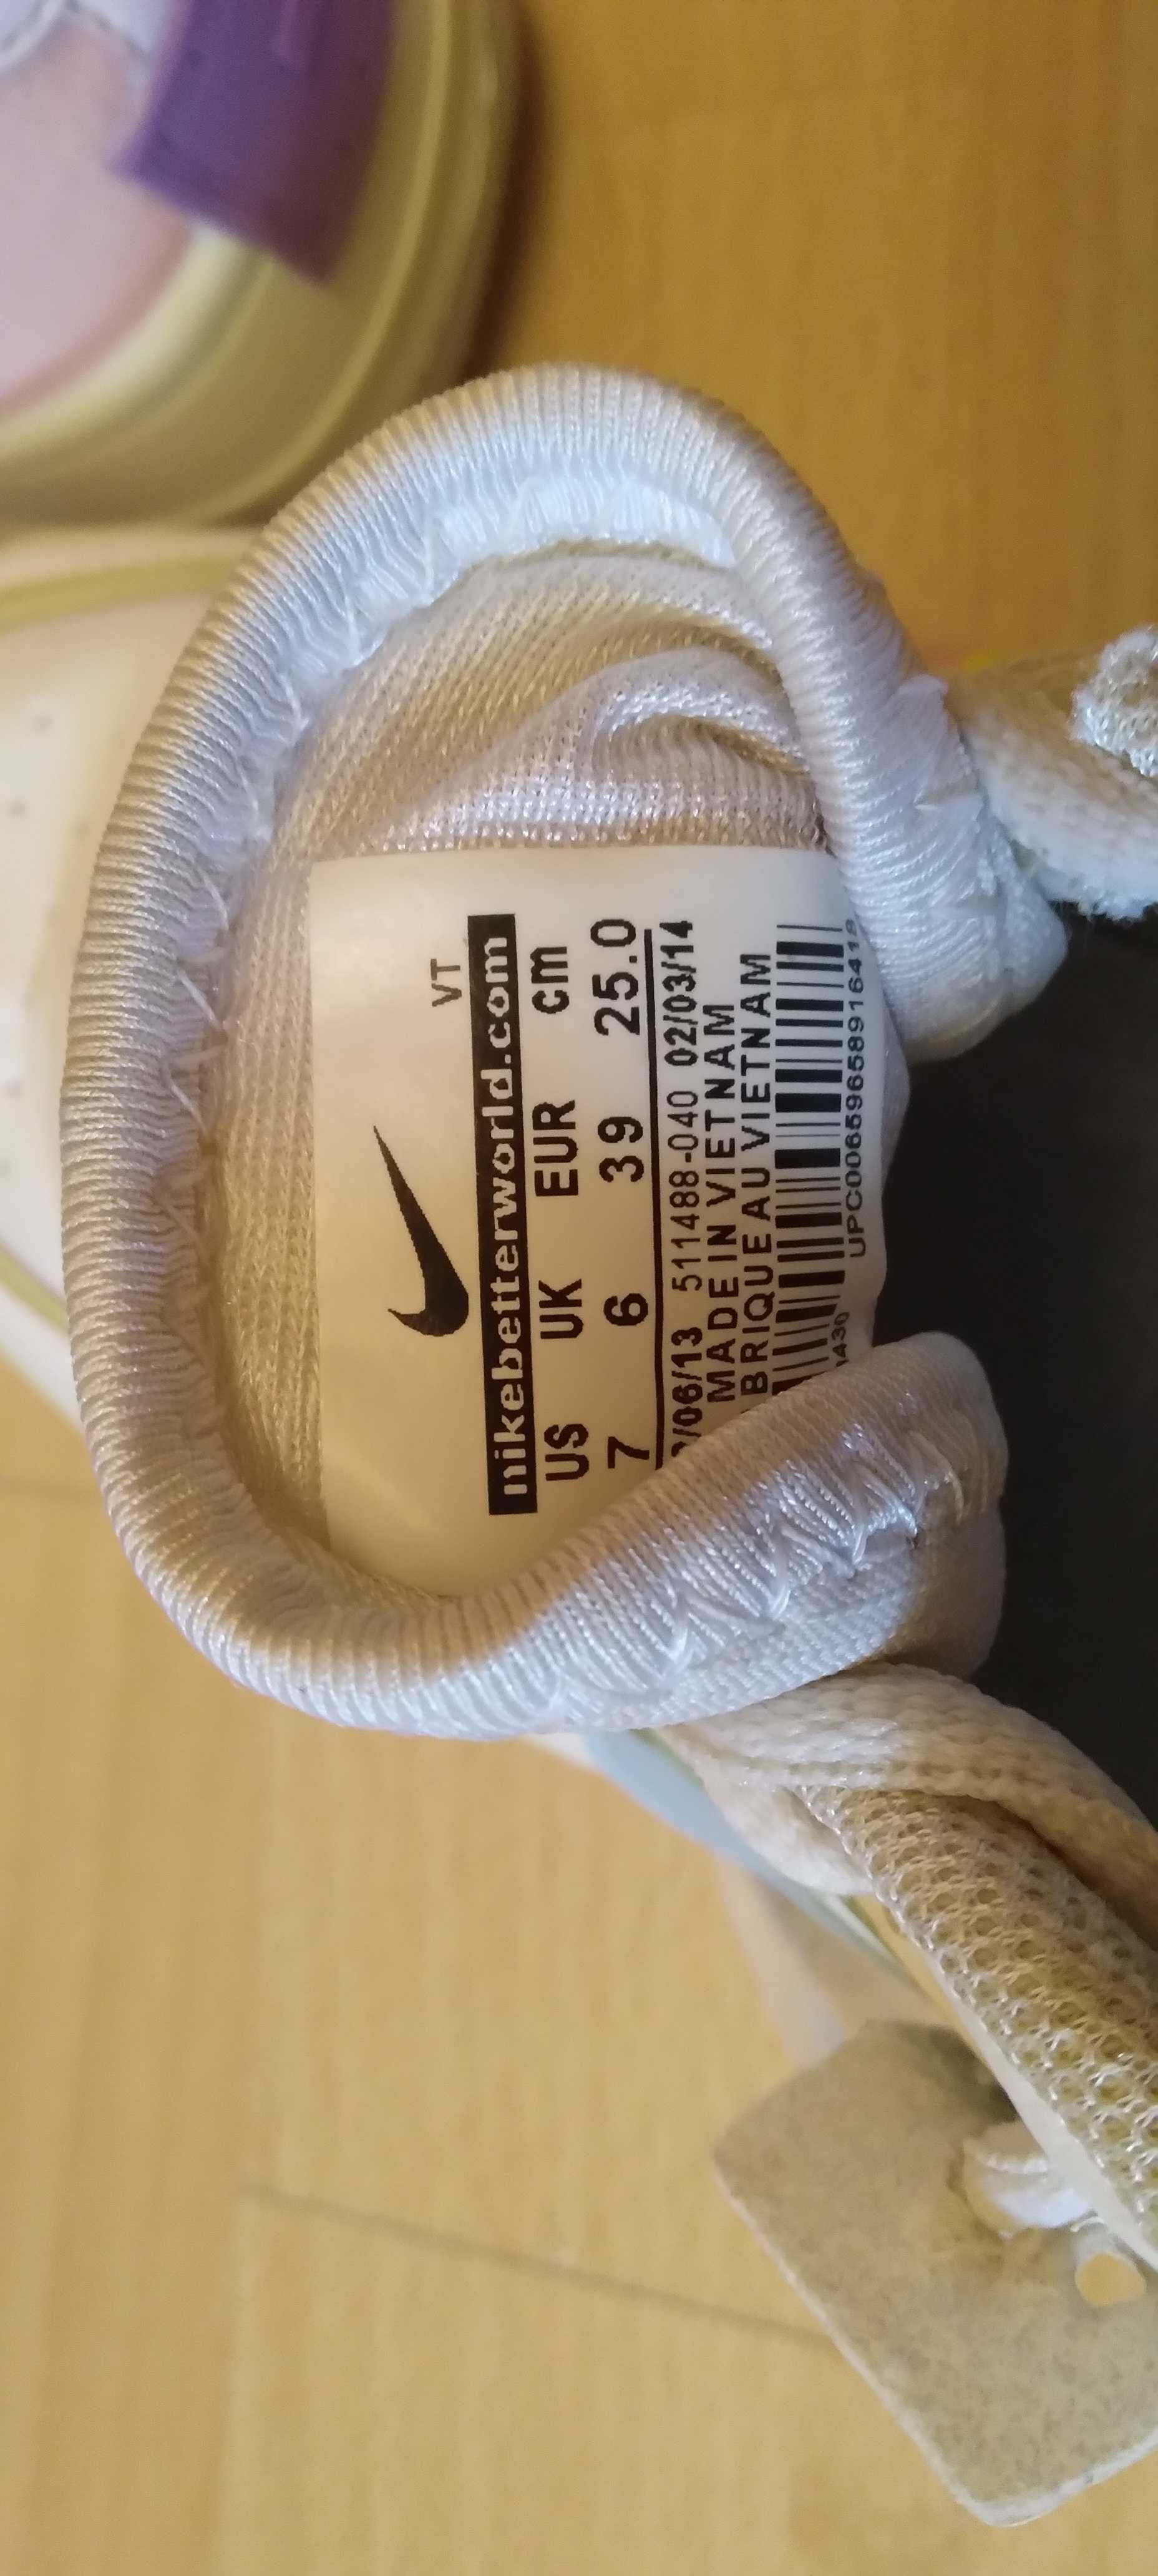 Nike Air кроссовки 39 размер оригинал